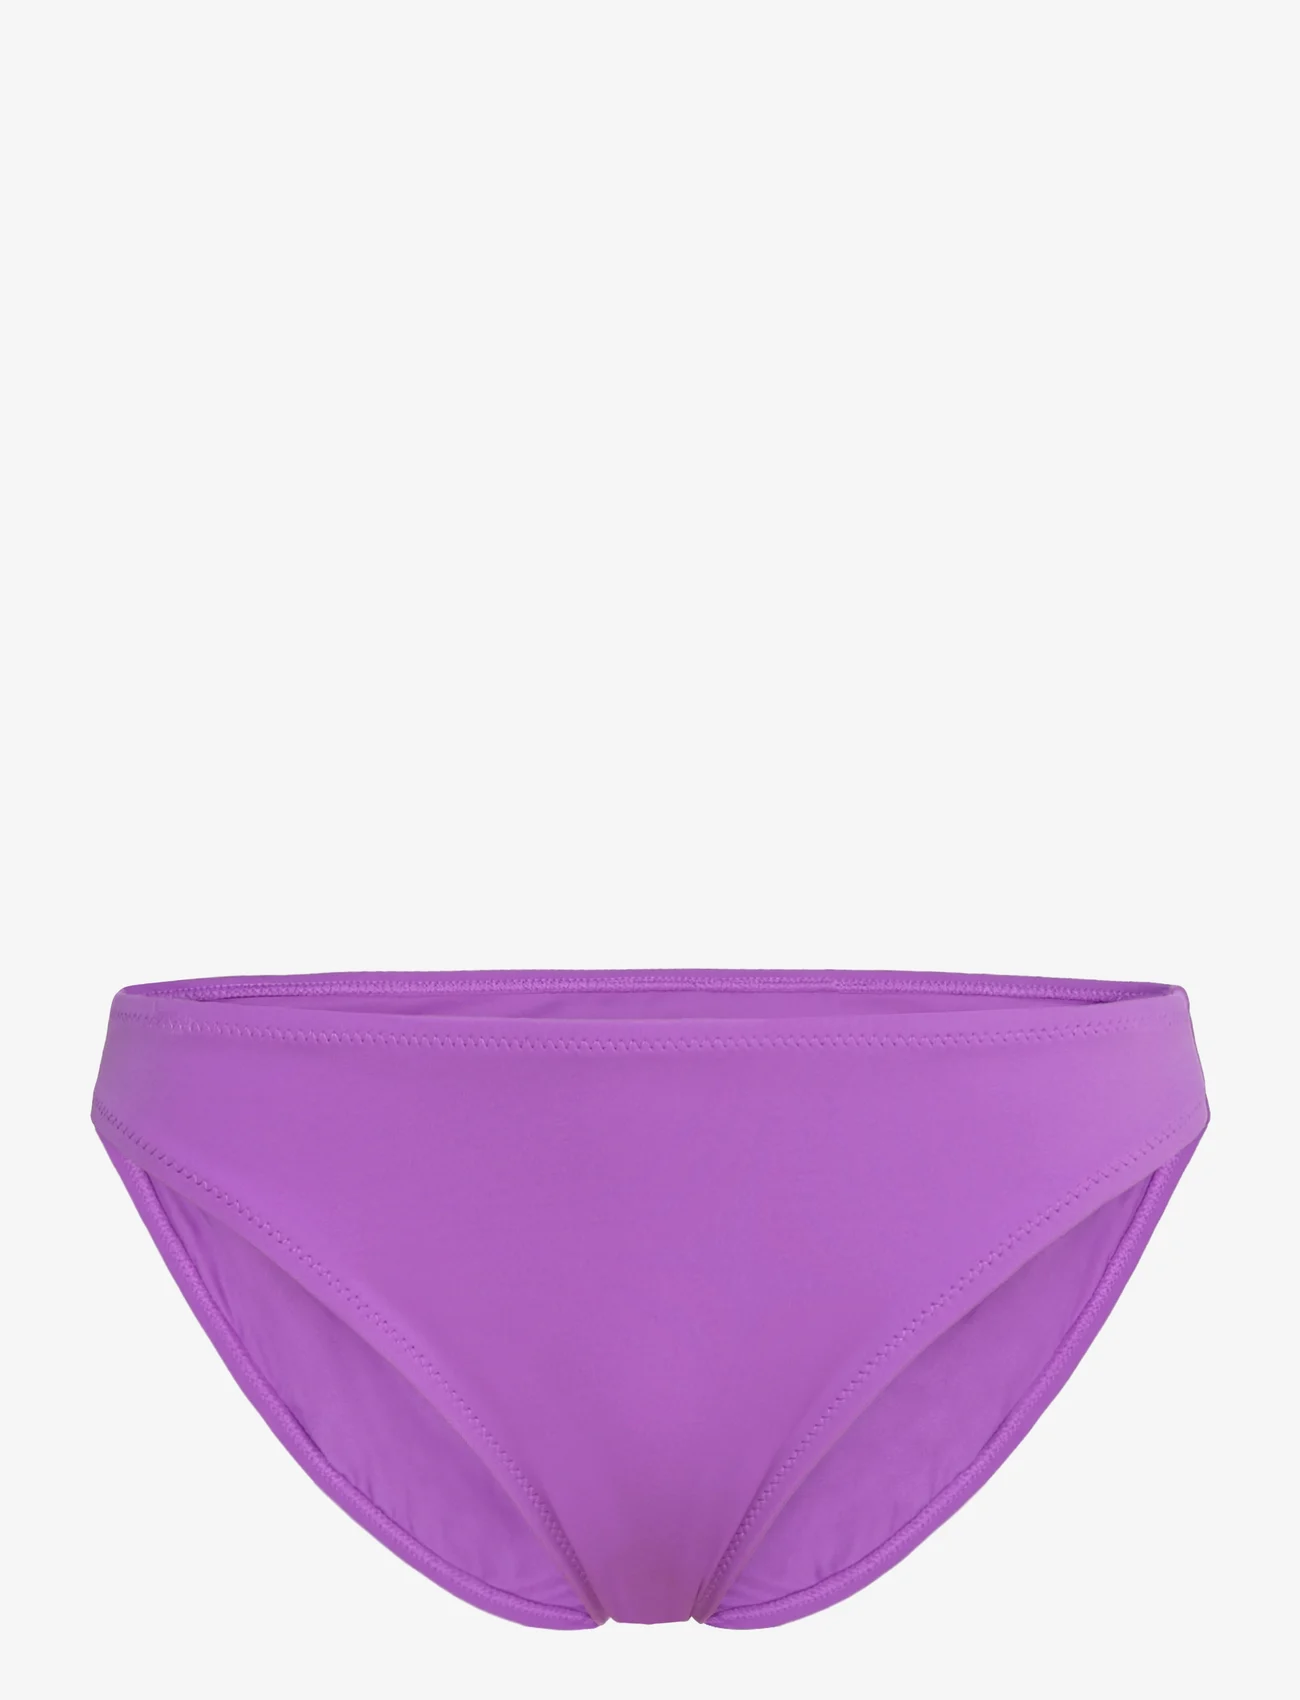 Puma Swim - PUMA SWIM WOMEN CLASSIC BIKINI BOTT - bikinihousut - purple - 0